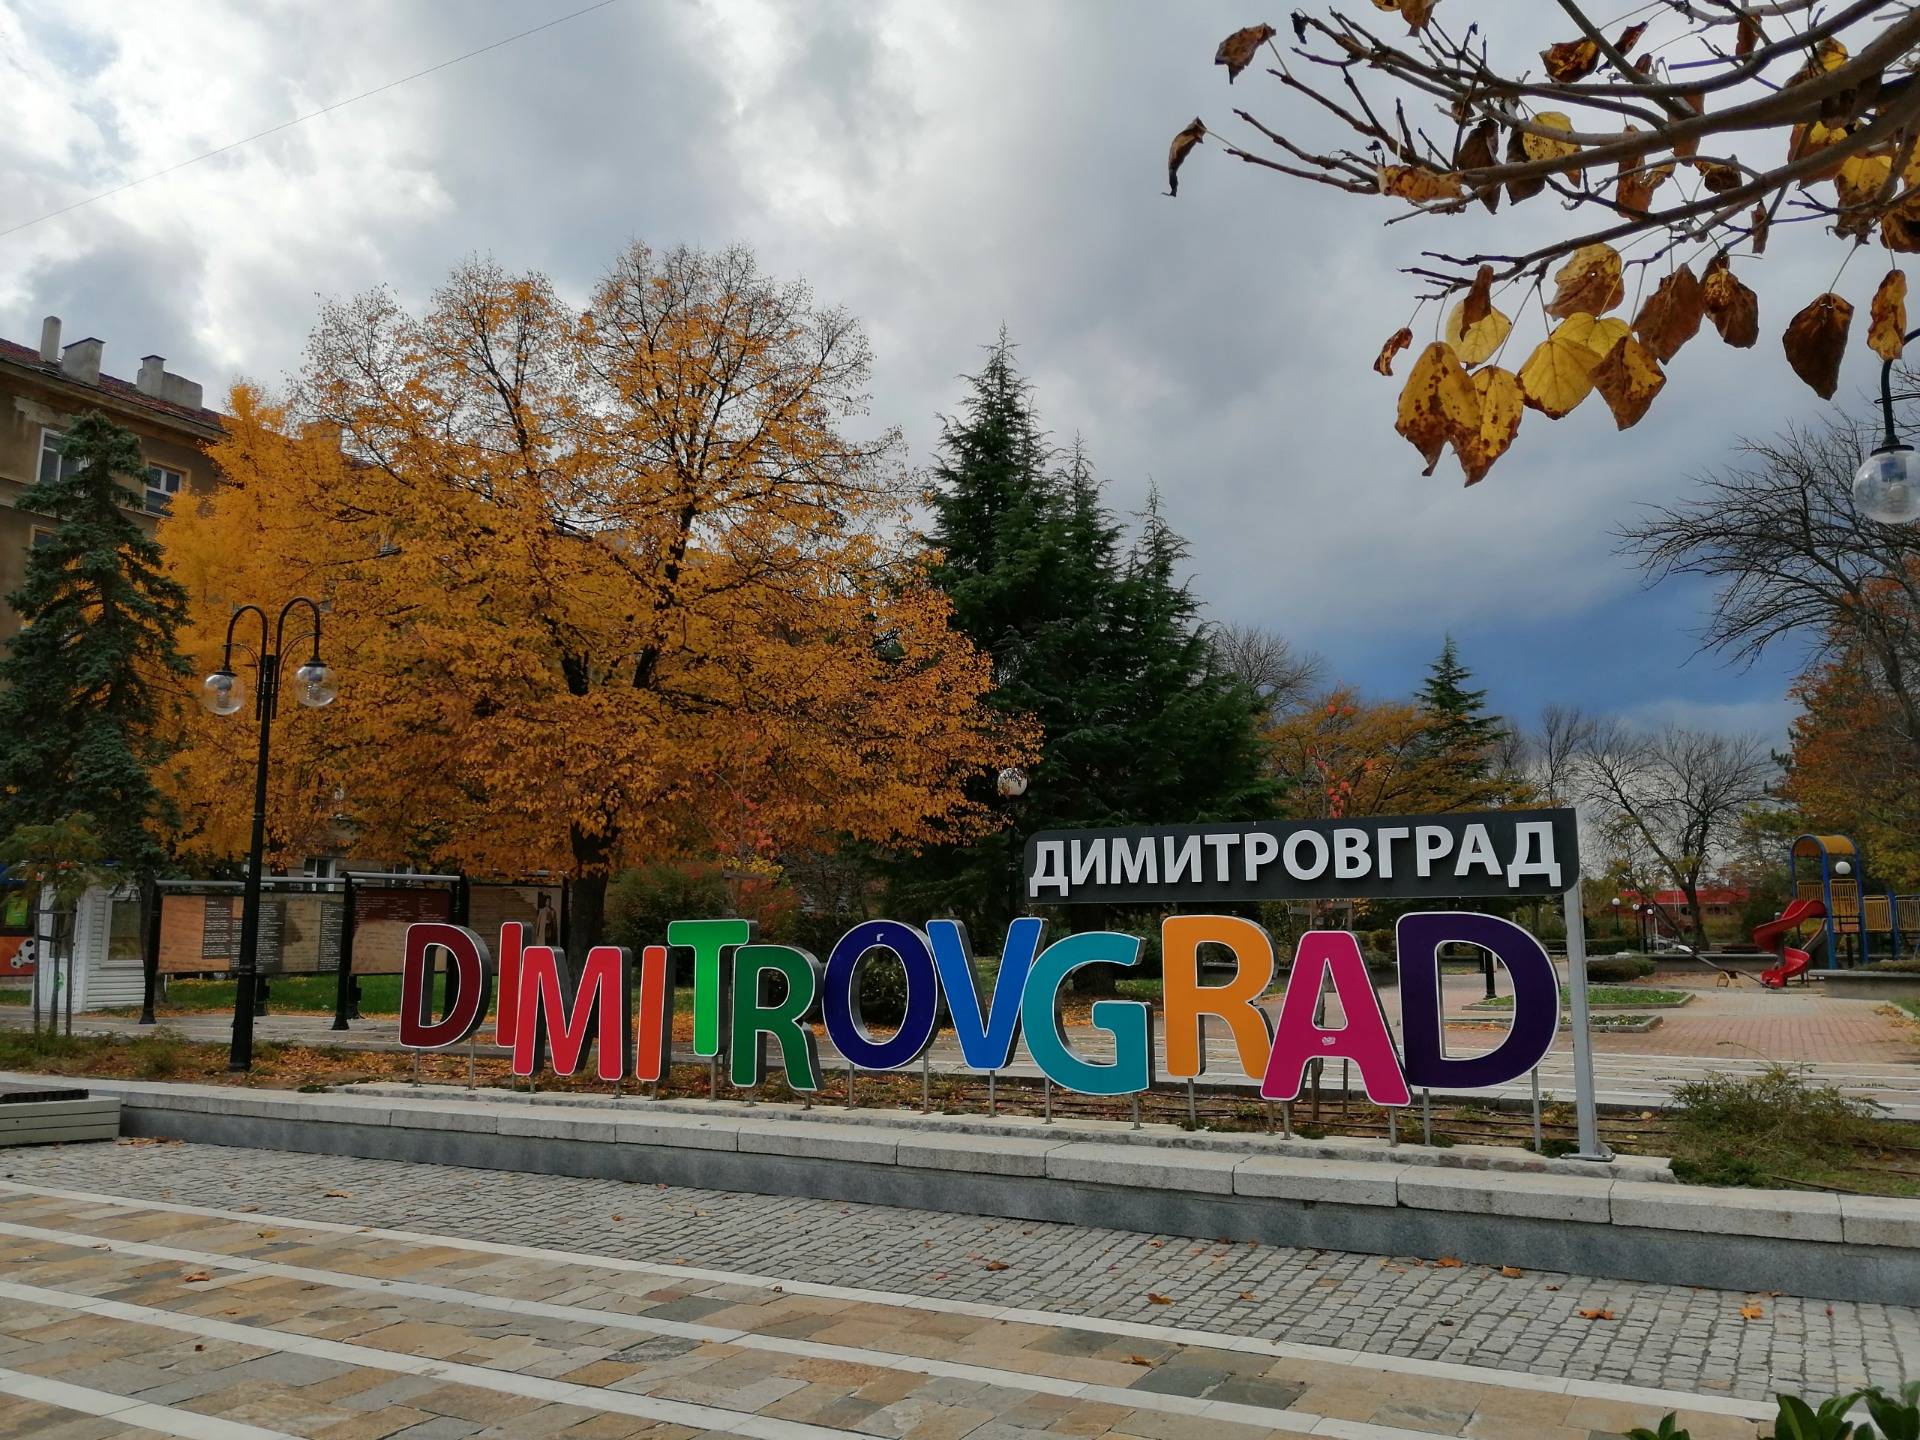 Town of Dimitrovgrad and its Jazz Trio (17 photos)